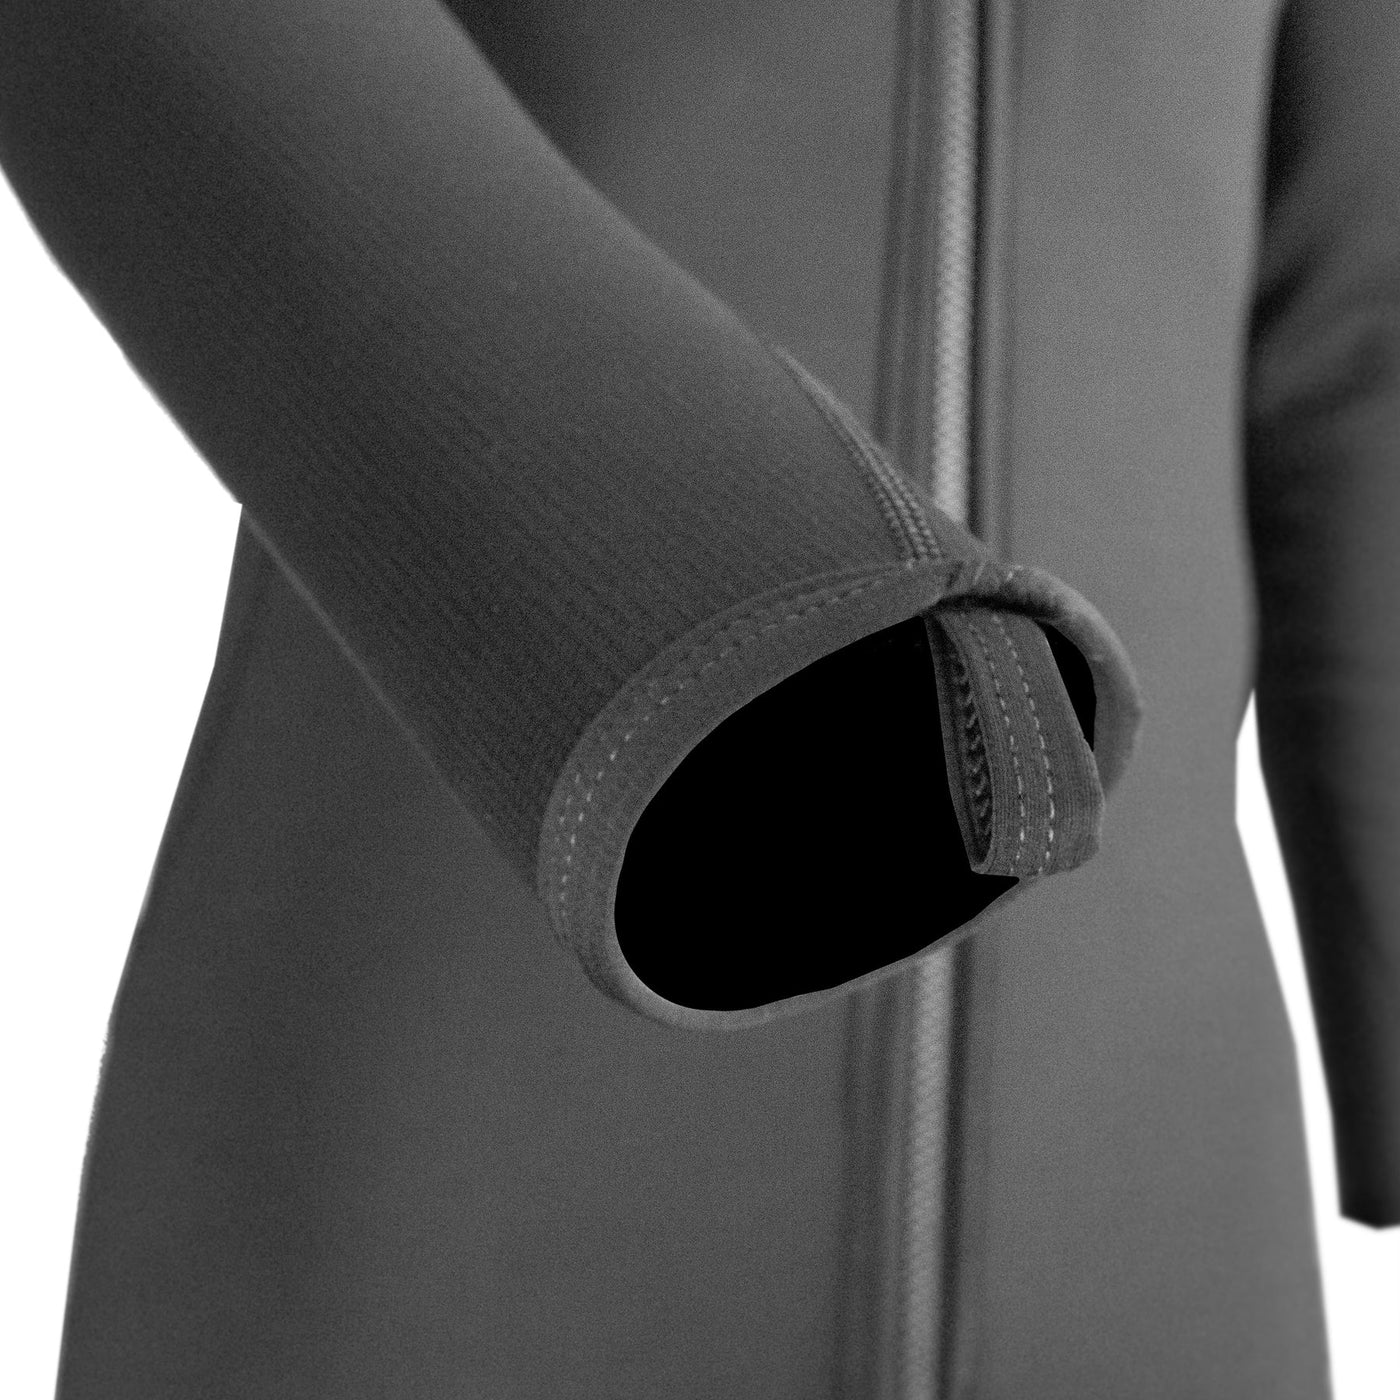 Titanium 2 Front Zip Suit with Hood & Socks Package - Female